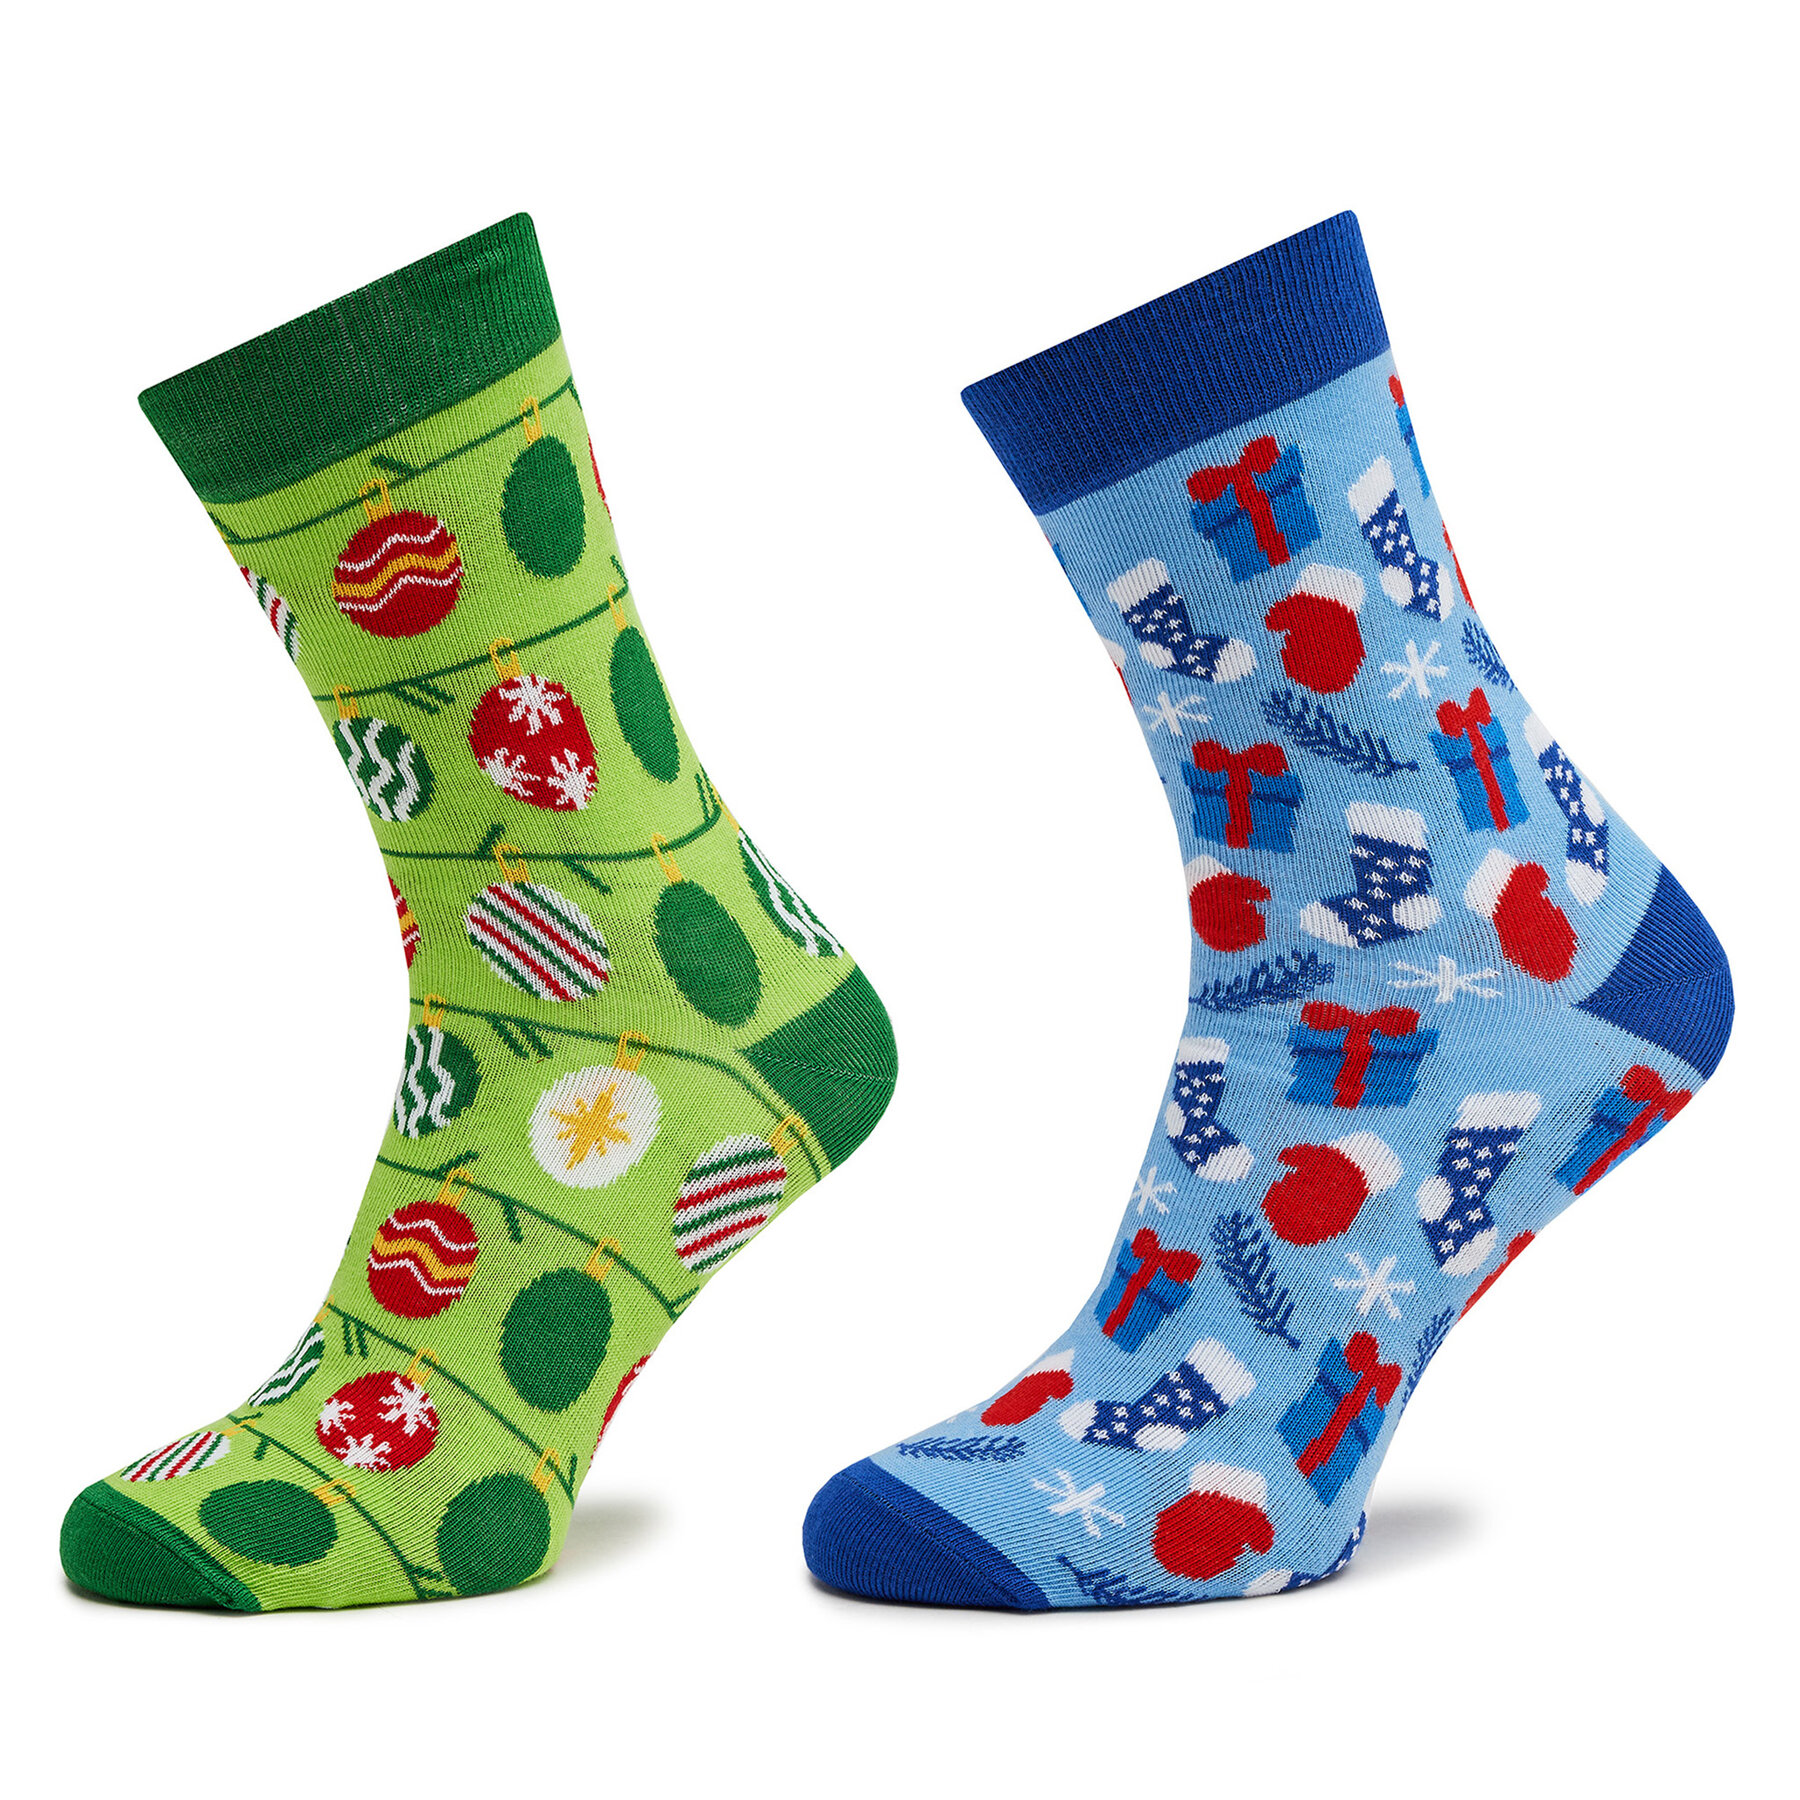 Ankelstrumpor unisex 2-pack Rainbow Socks Xmas Socks Balls Adult Gifts Pak 2 Färgglad